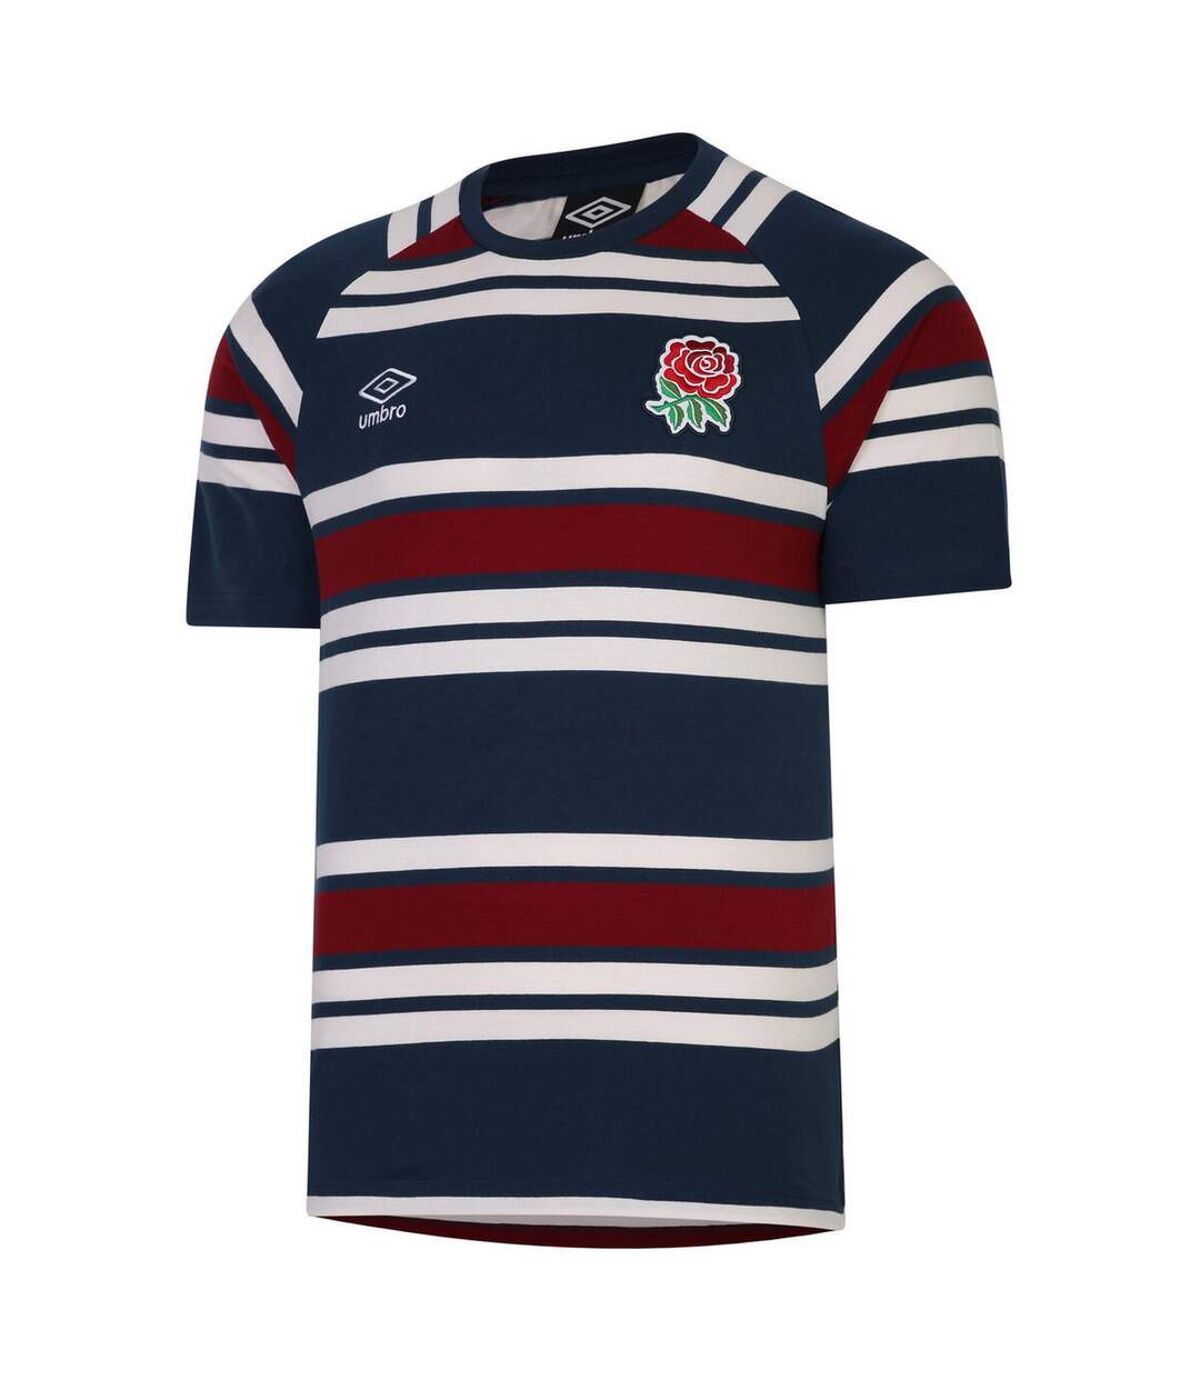 England Rugby Mens Classic Umbro T-Shirt (Moonlight/Cloud Dancer/Rhubarb)